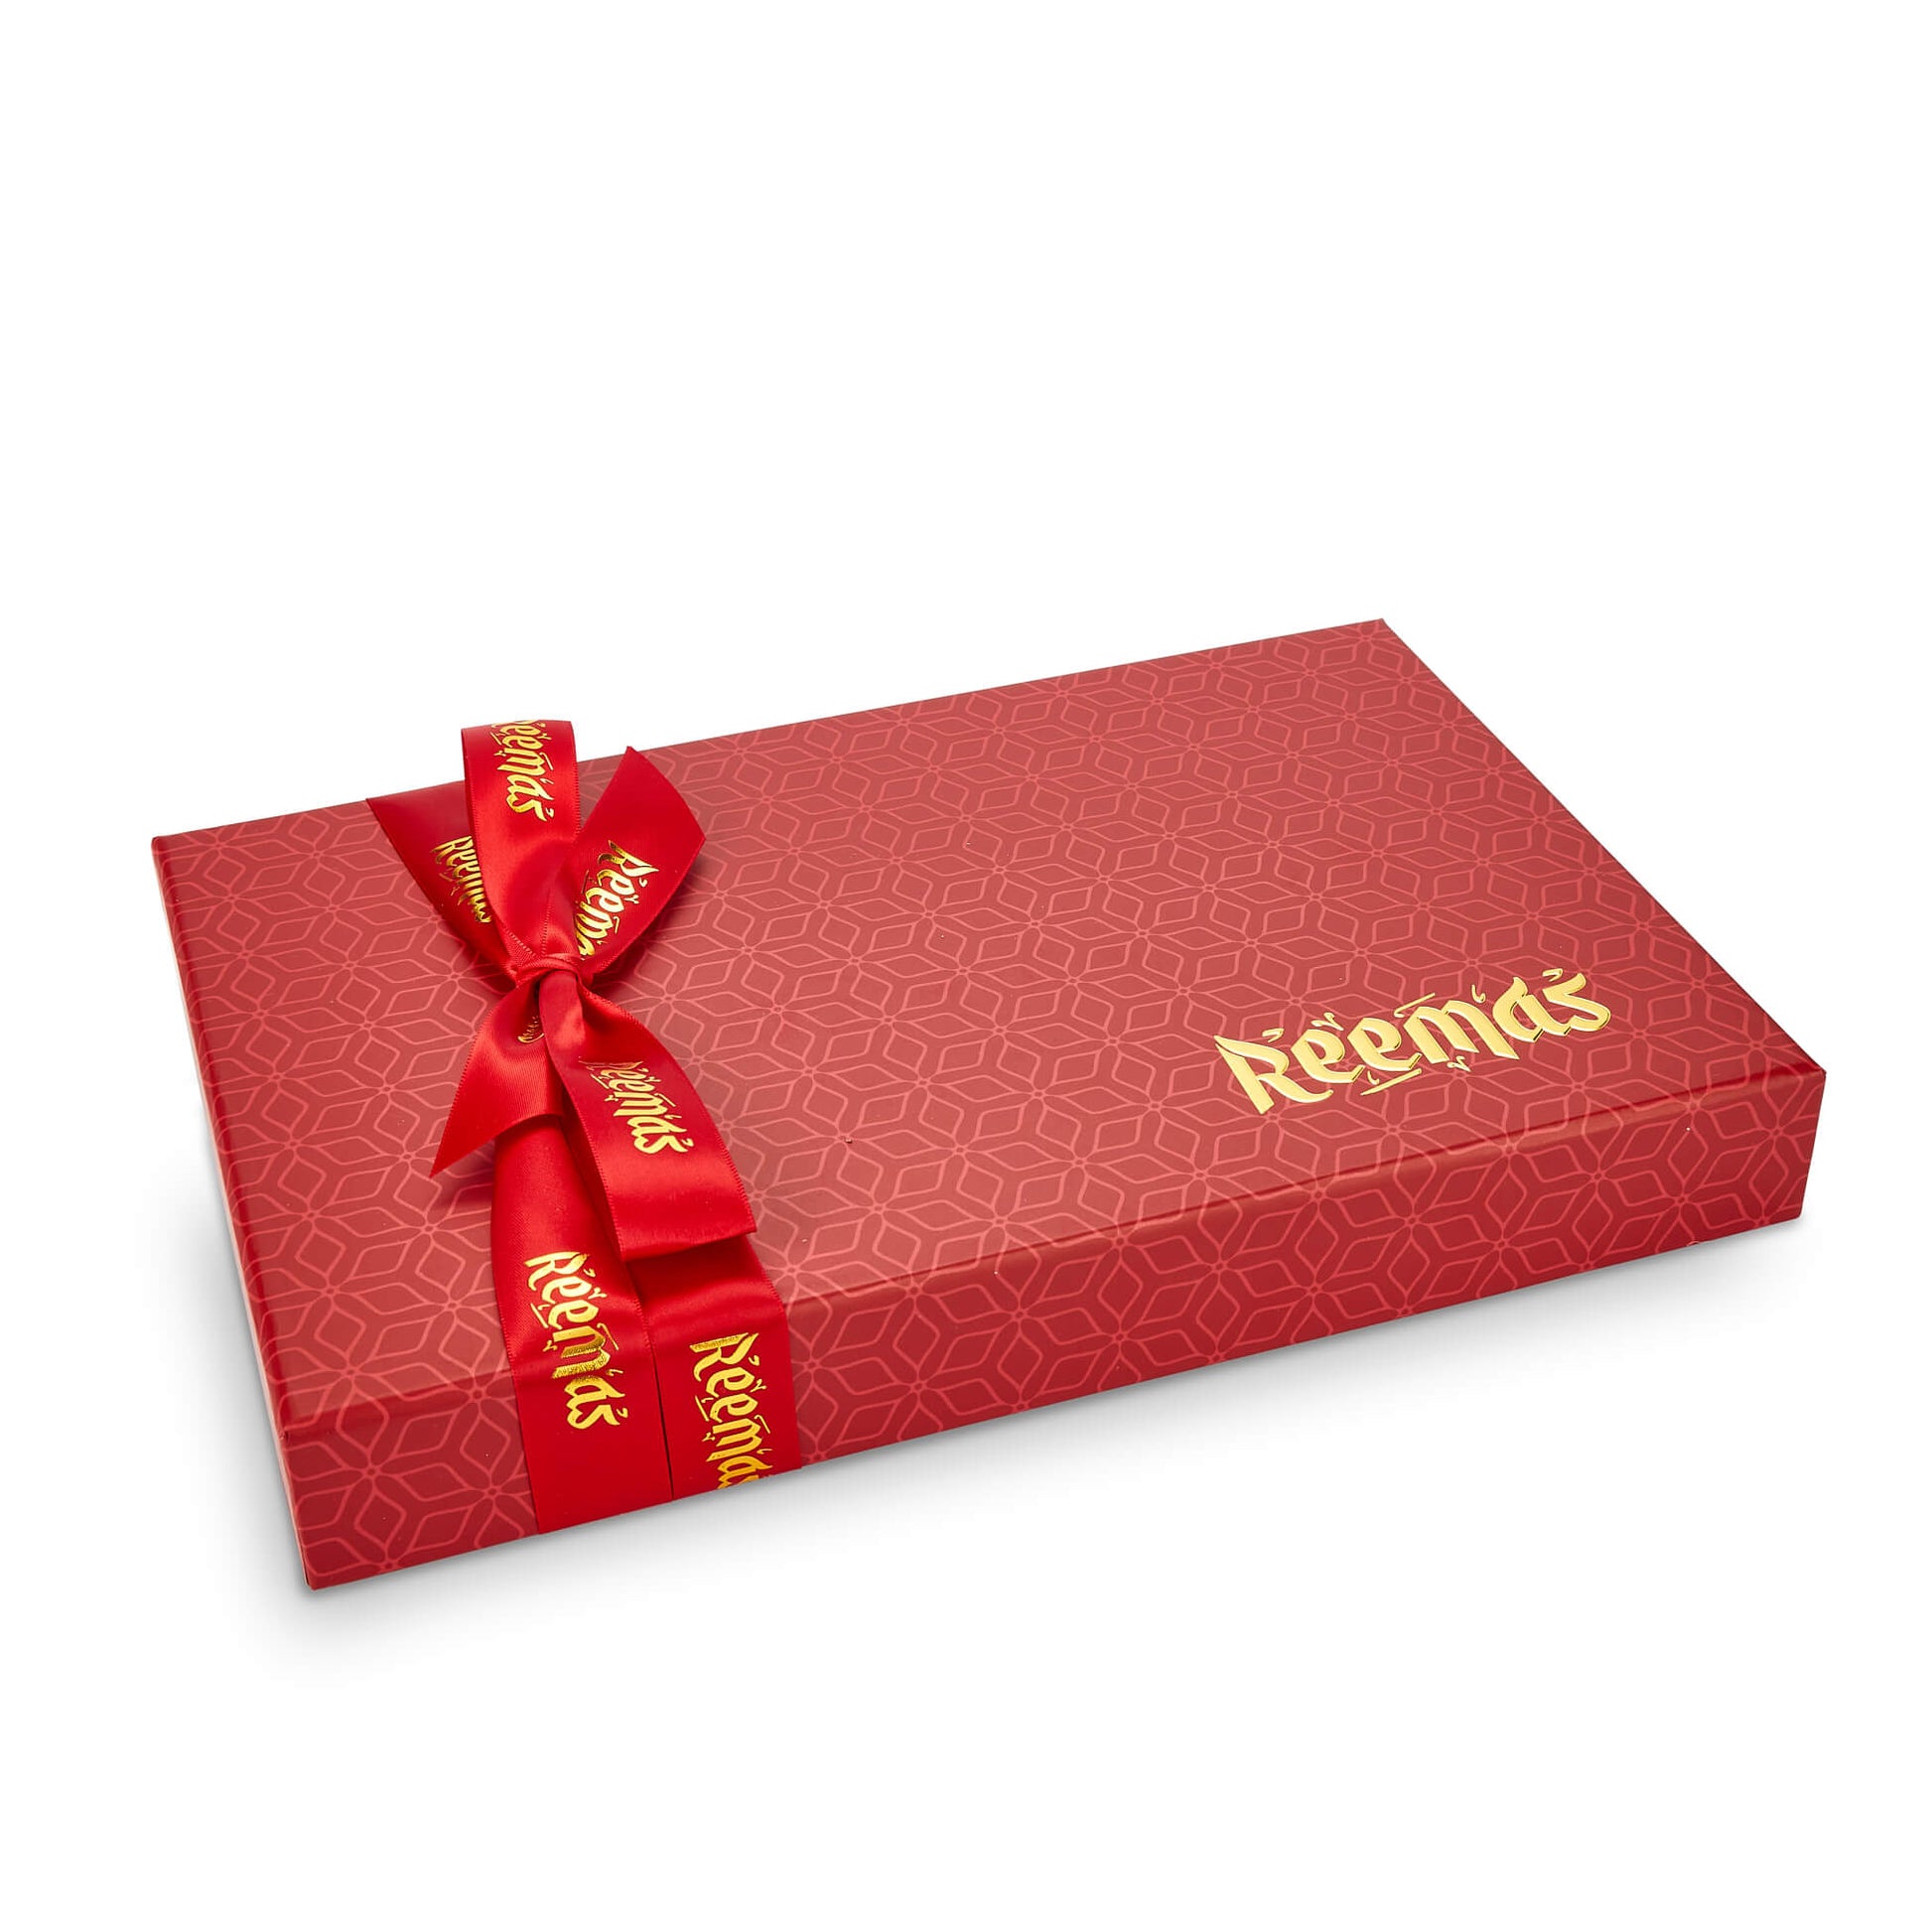 Reemas Dates Gift Box UK bateel hotel chocolat godiva 